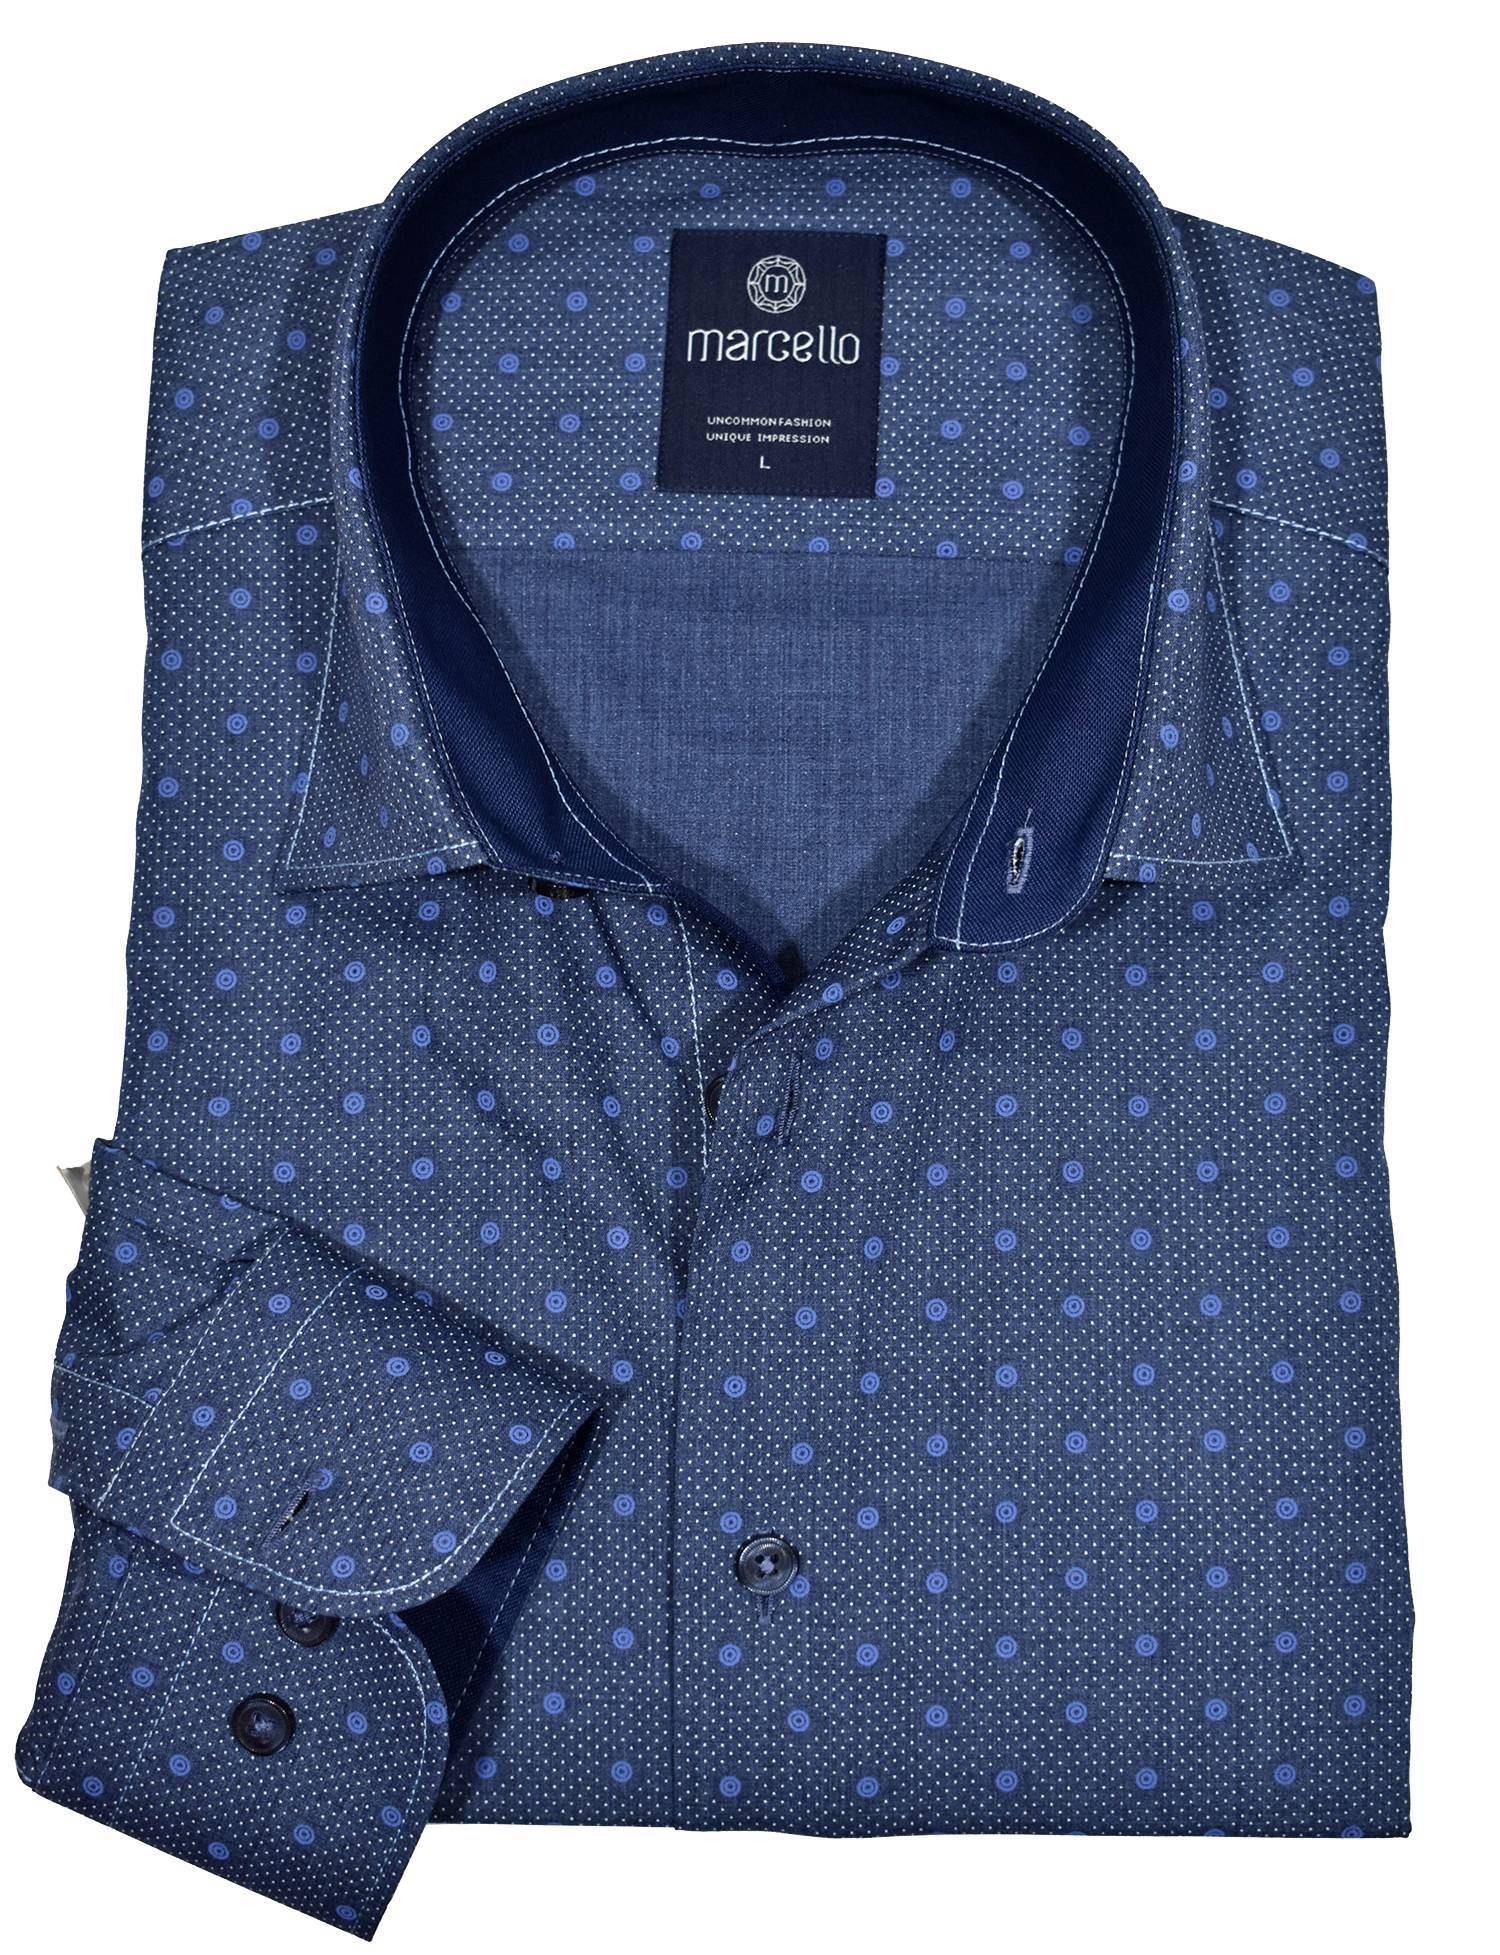 Marcello Midnight Navy Neat Circle Medallion Print Shirt In Light Blue - Rainwater's Men's Clothing and Tuxedo Rental